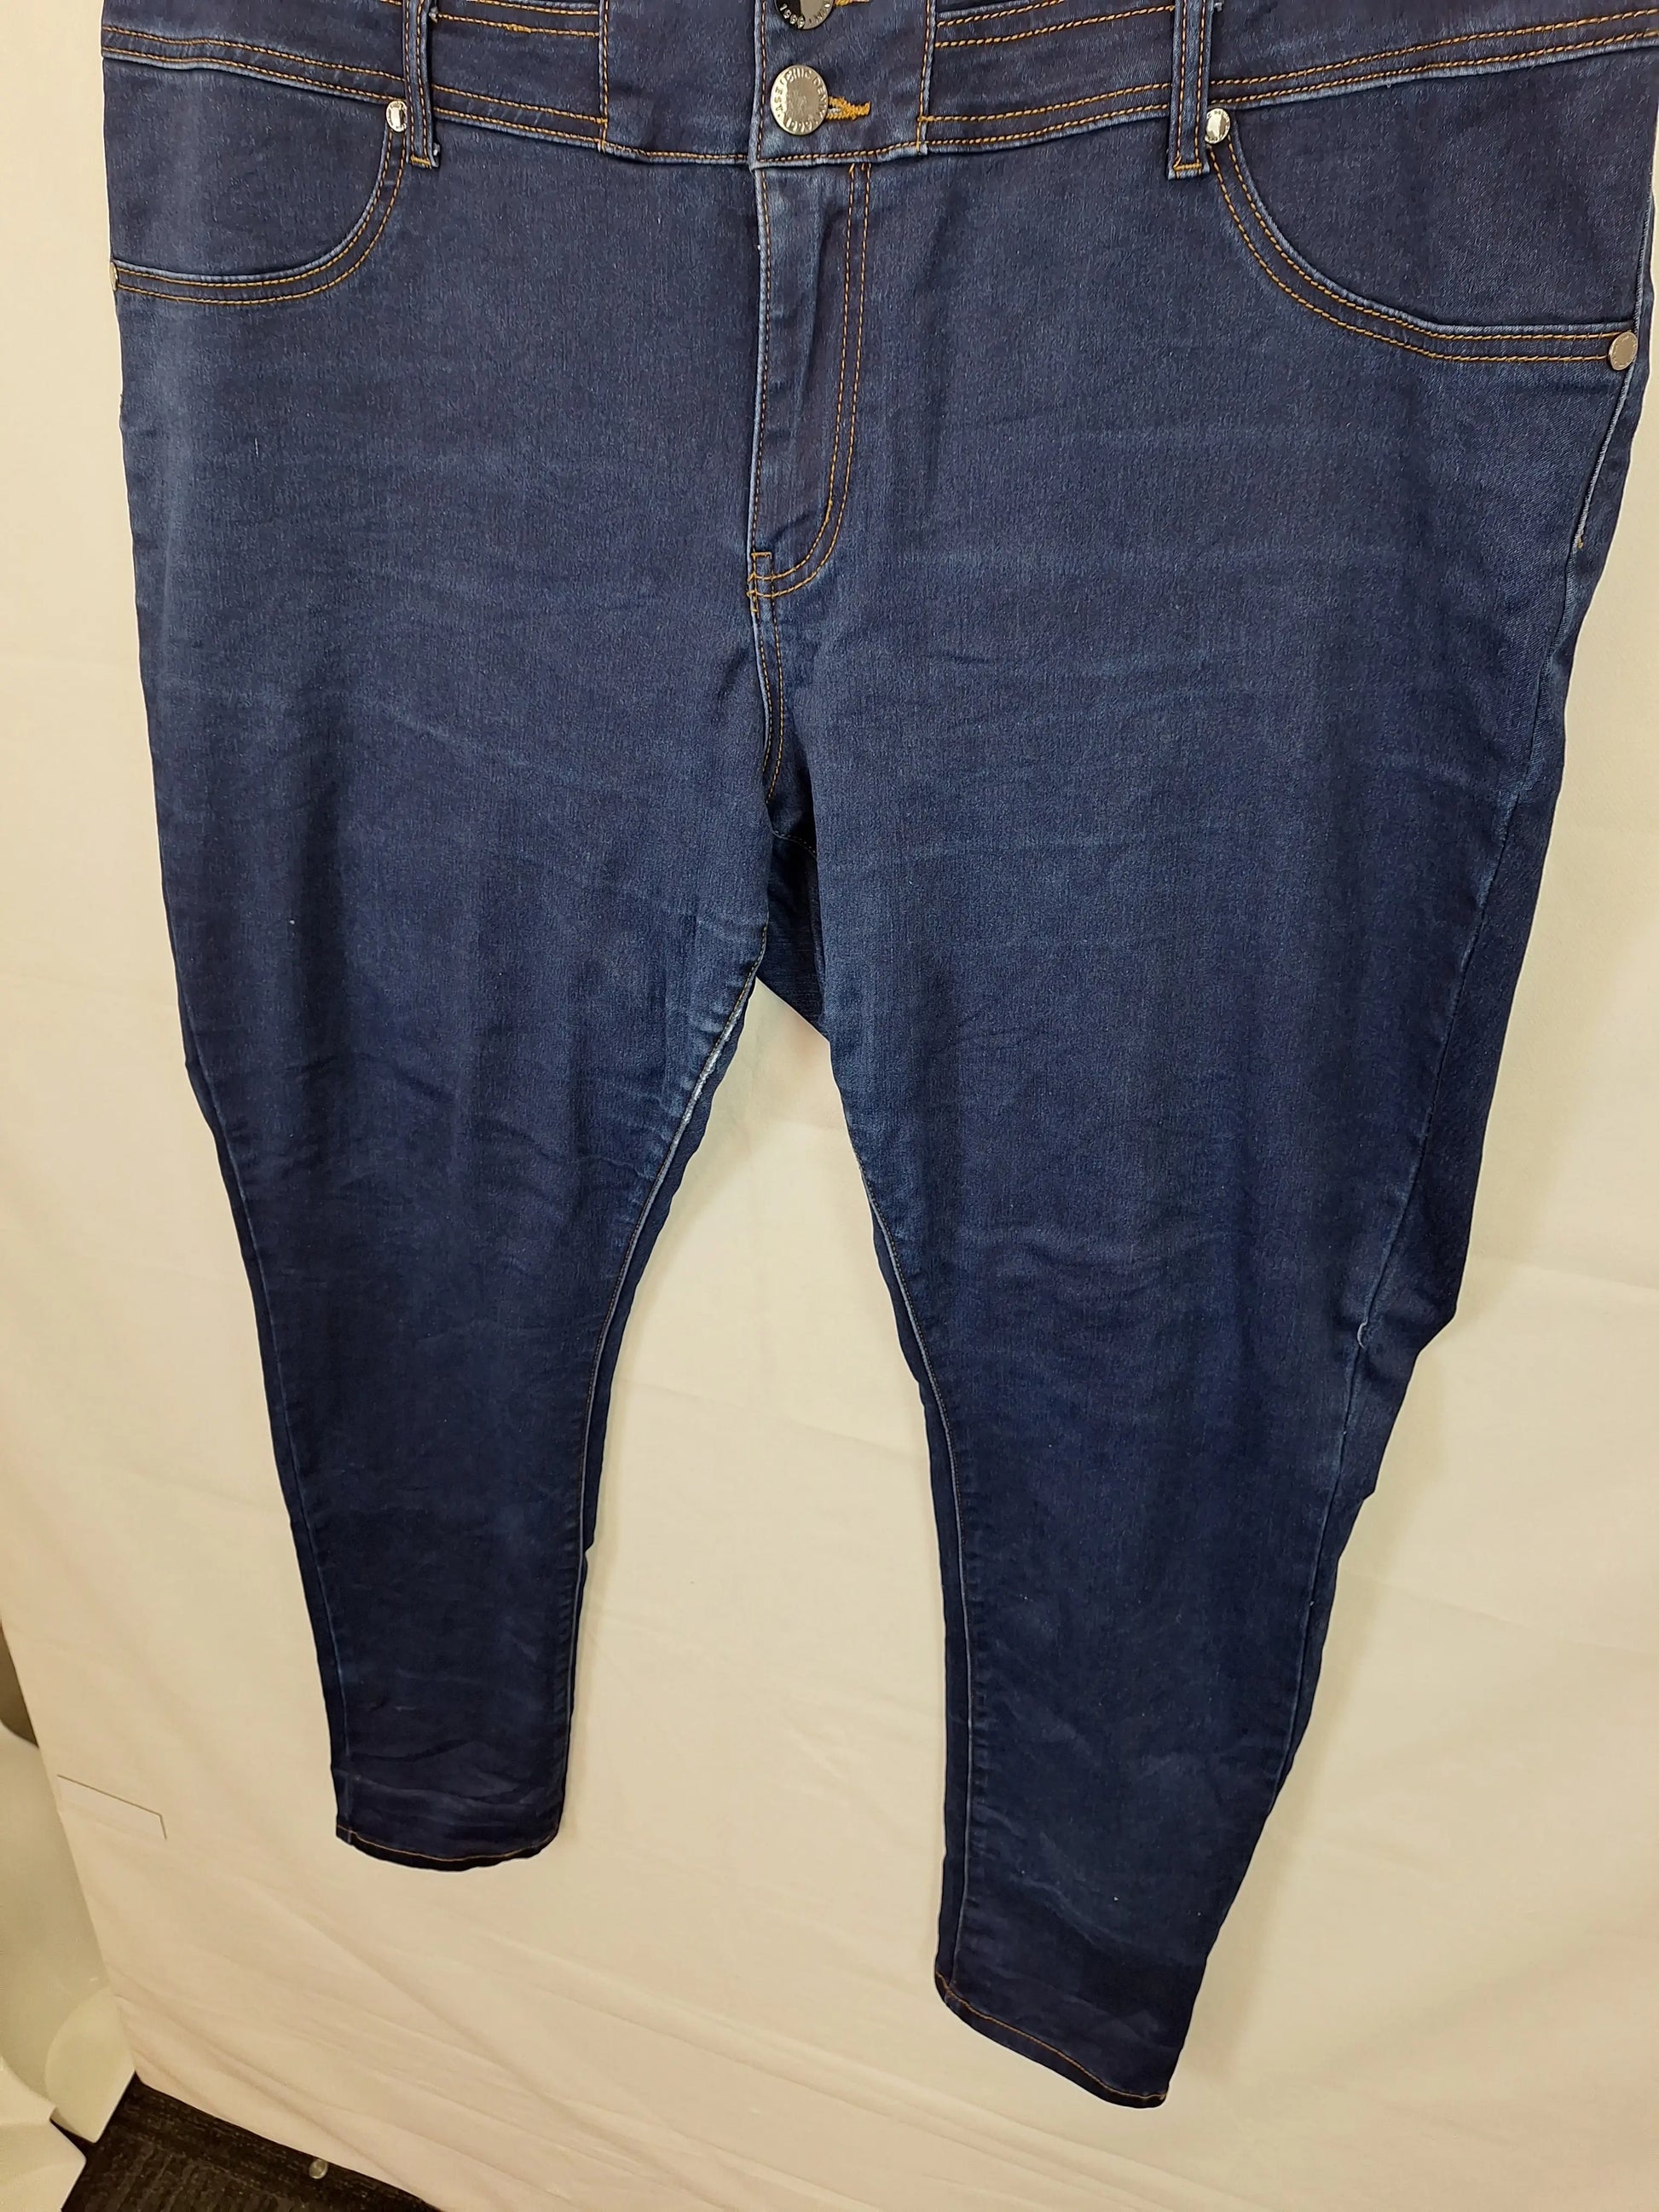 City Chic Dark Wash Skinny Denim Jeans Size 20 by SwapUp-Online Second Hand Store-Online Thrift Store